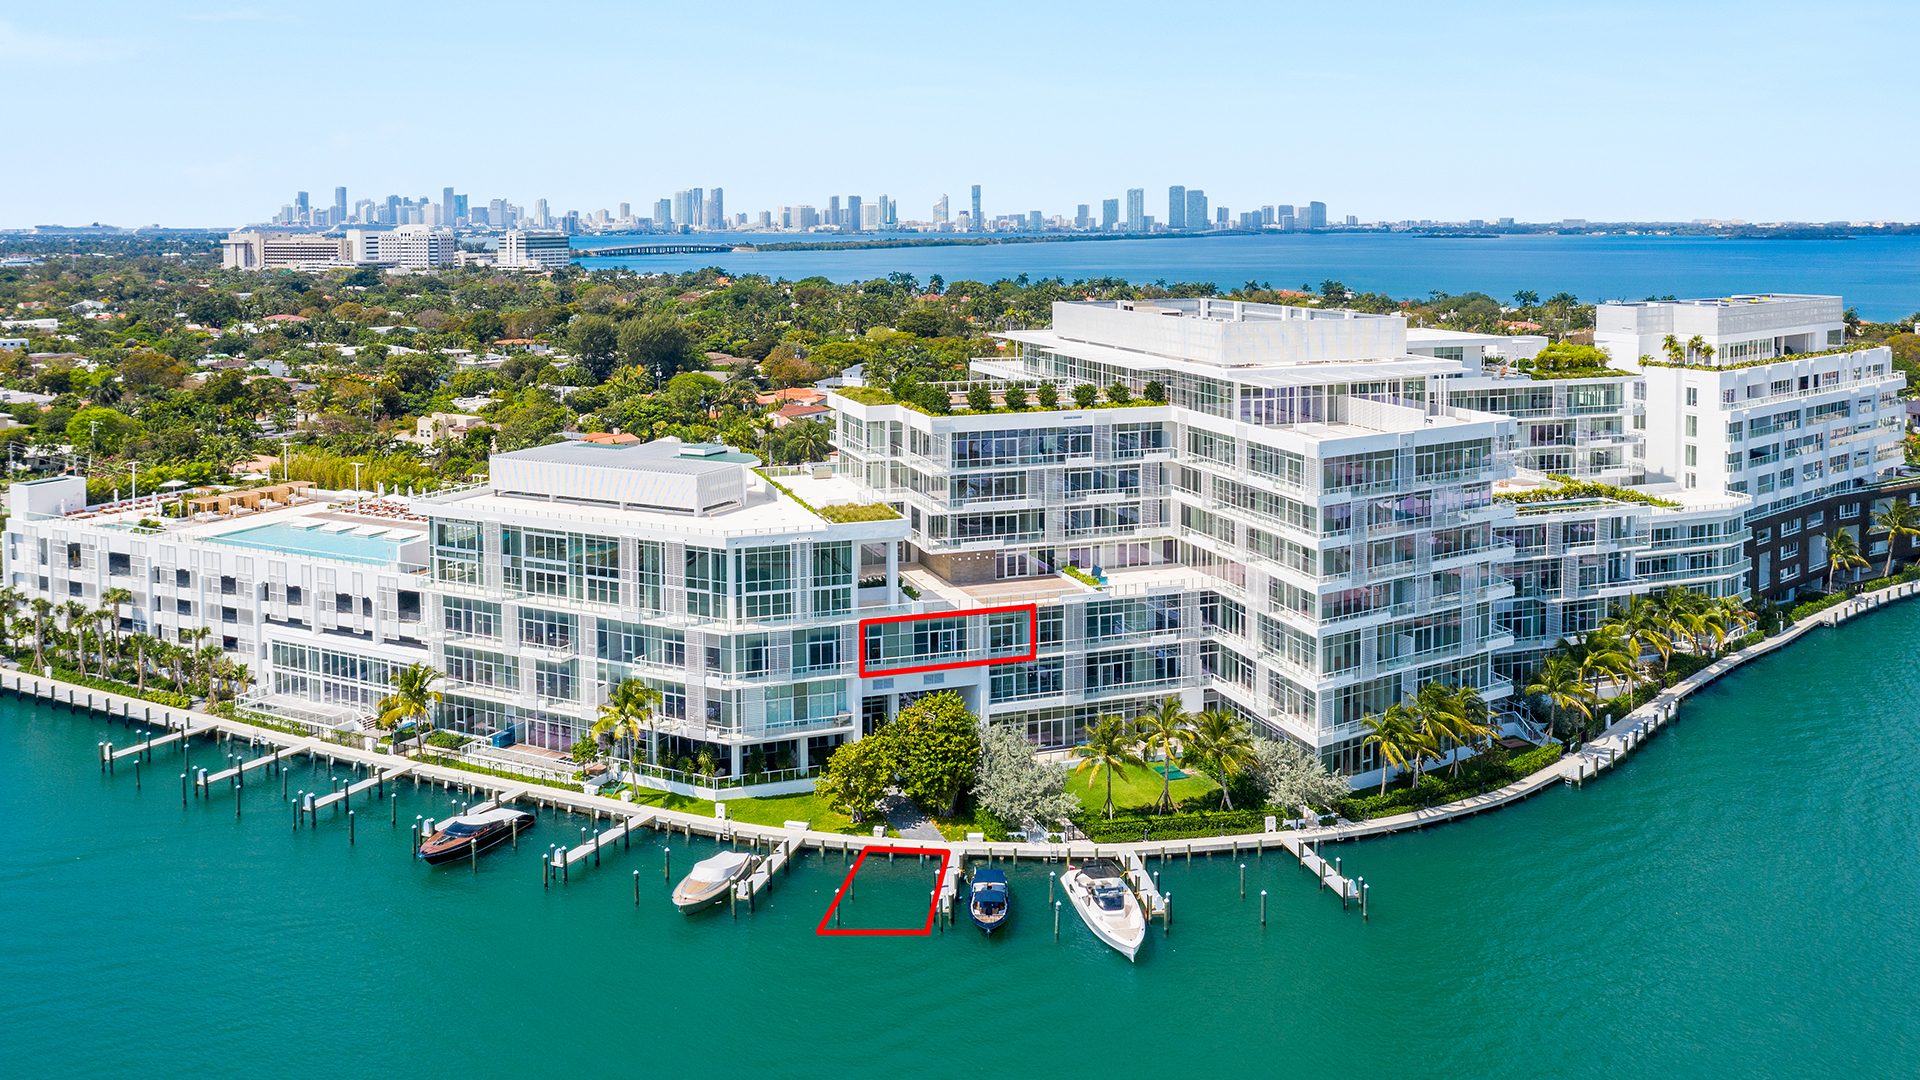 Unit 304 For Sale at Residences at The Ritz-Carlton, Miami Beach Florida 33140